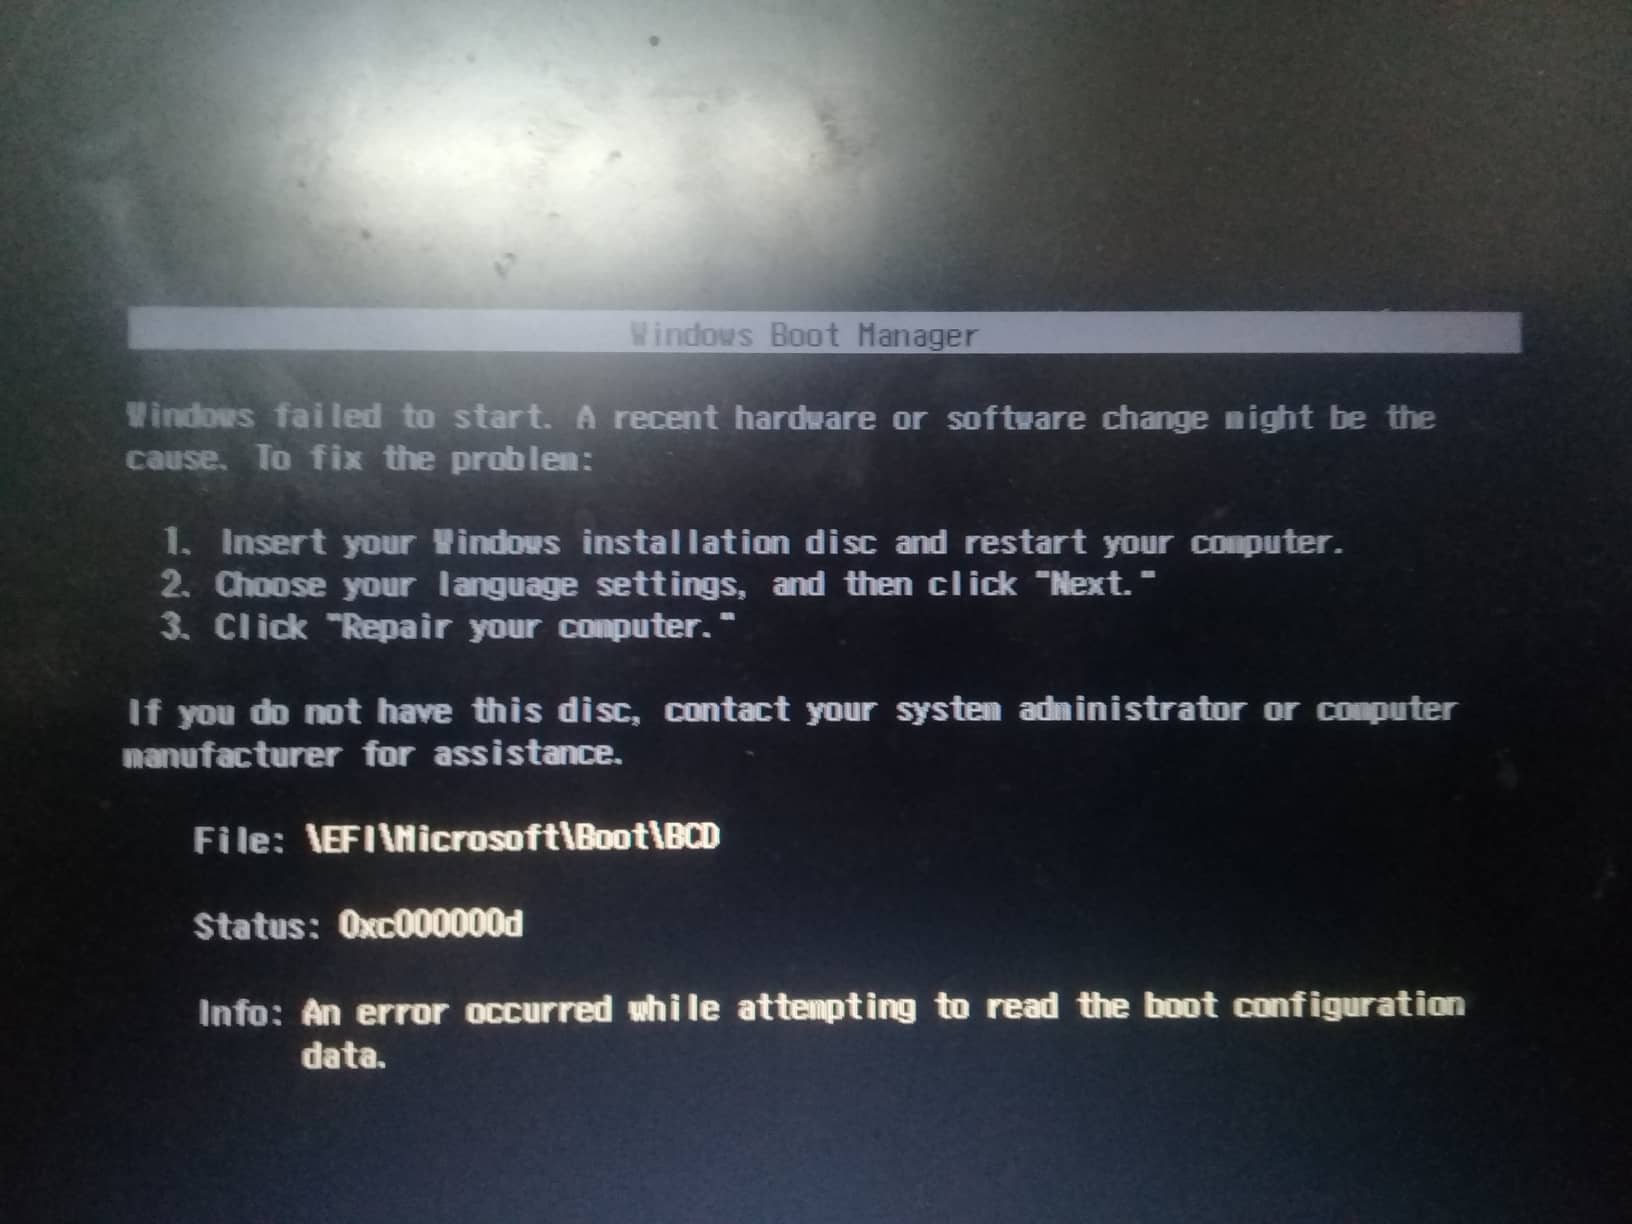 failed to start windows - burn windows 7 57080024_2269415126651679_2160793966398668800_n.jpg?_nc_cat=102&_nc_ht=scontent.fruh4-1.jpg